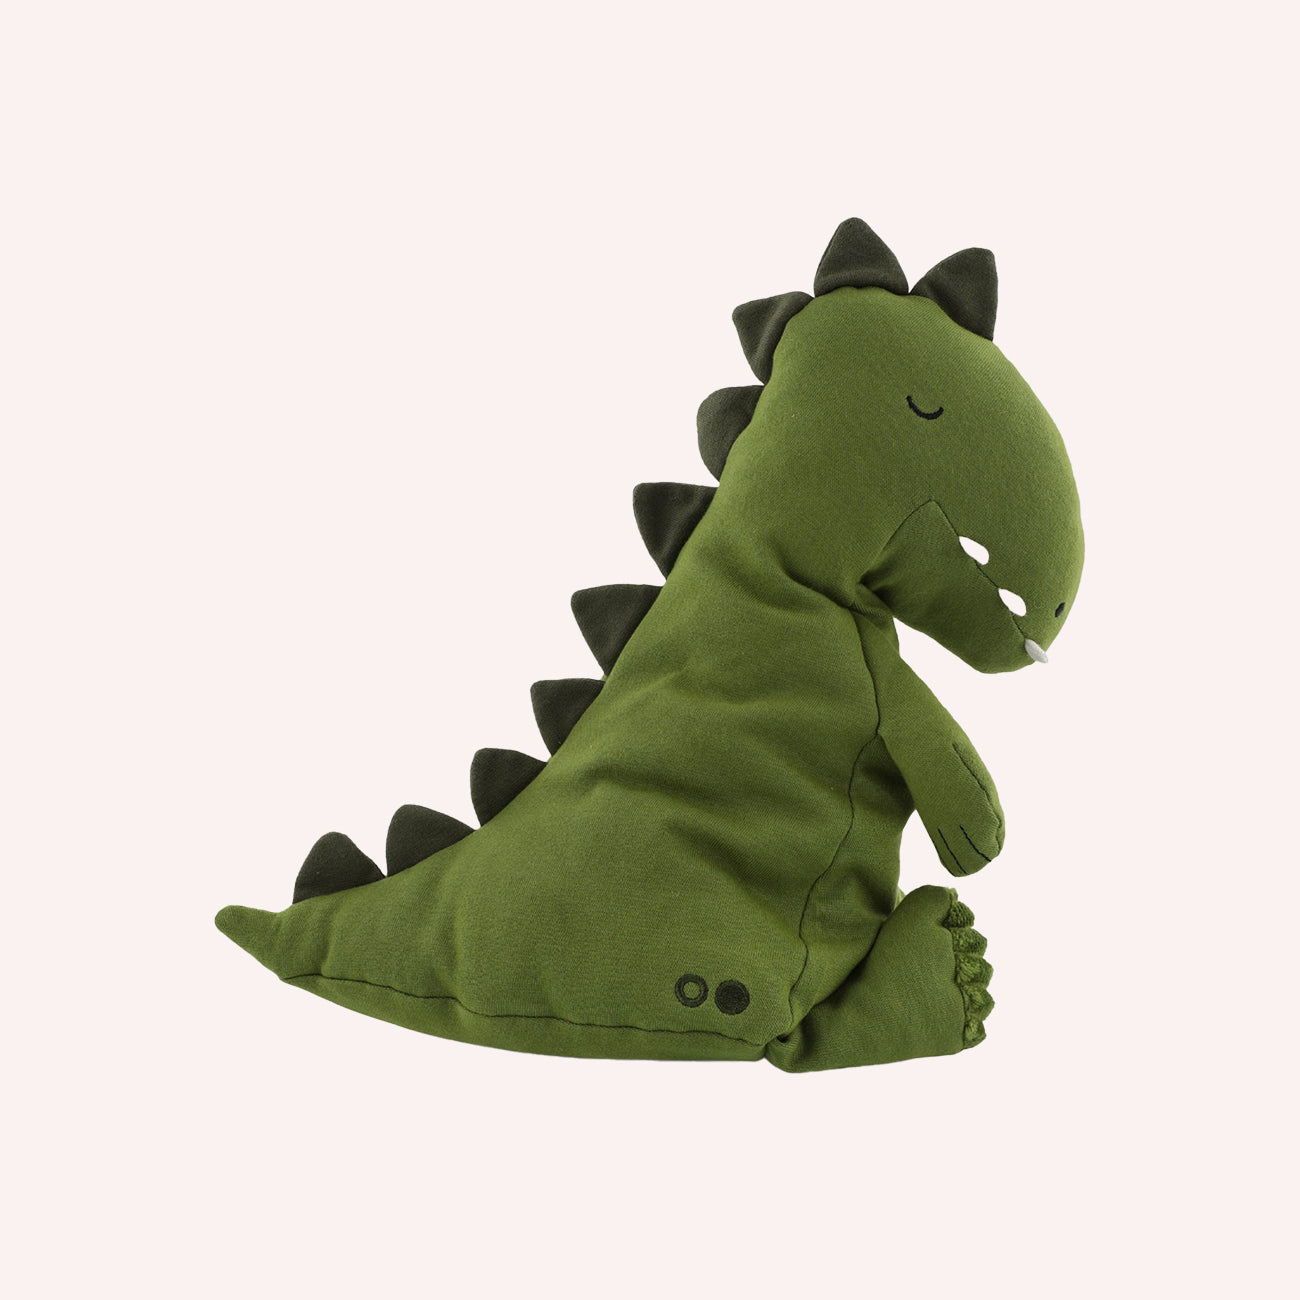 Plush Toy - Mr. Dino